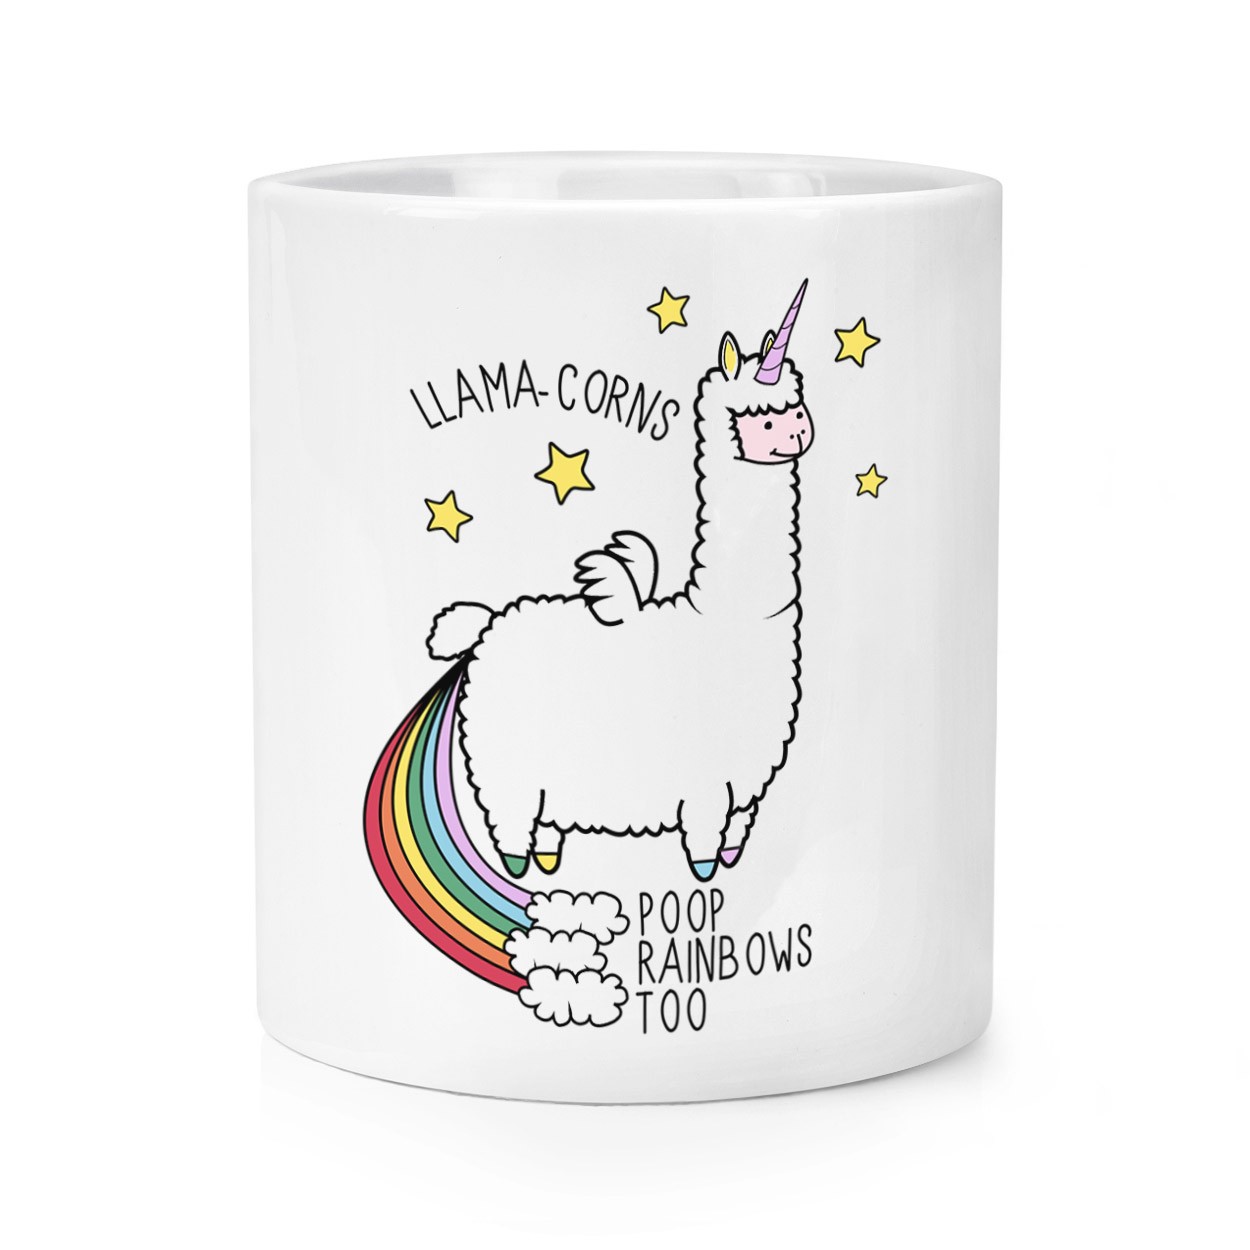 Llama-corns Poop Rainbows Too Makeup Brush Pencil Pot